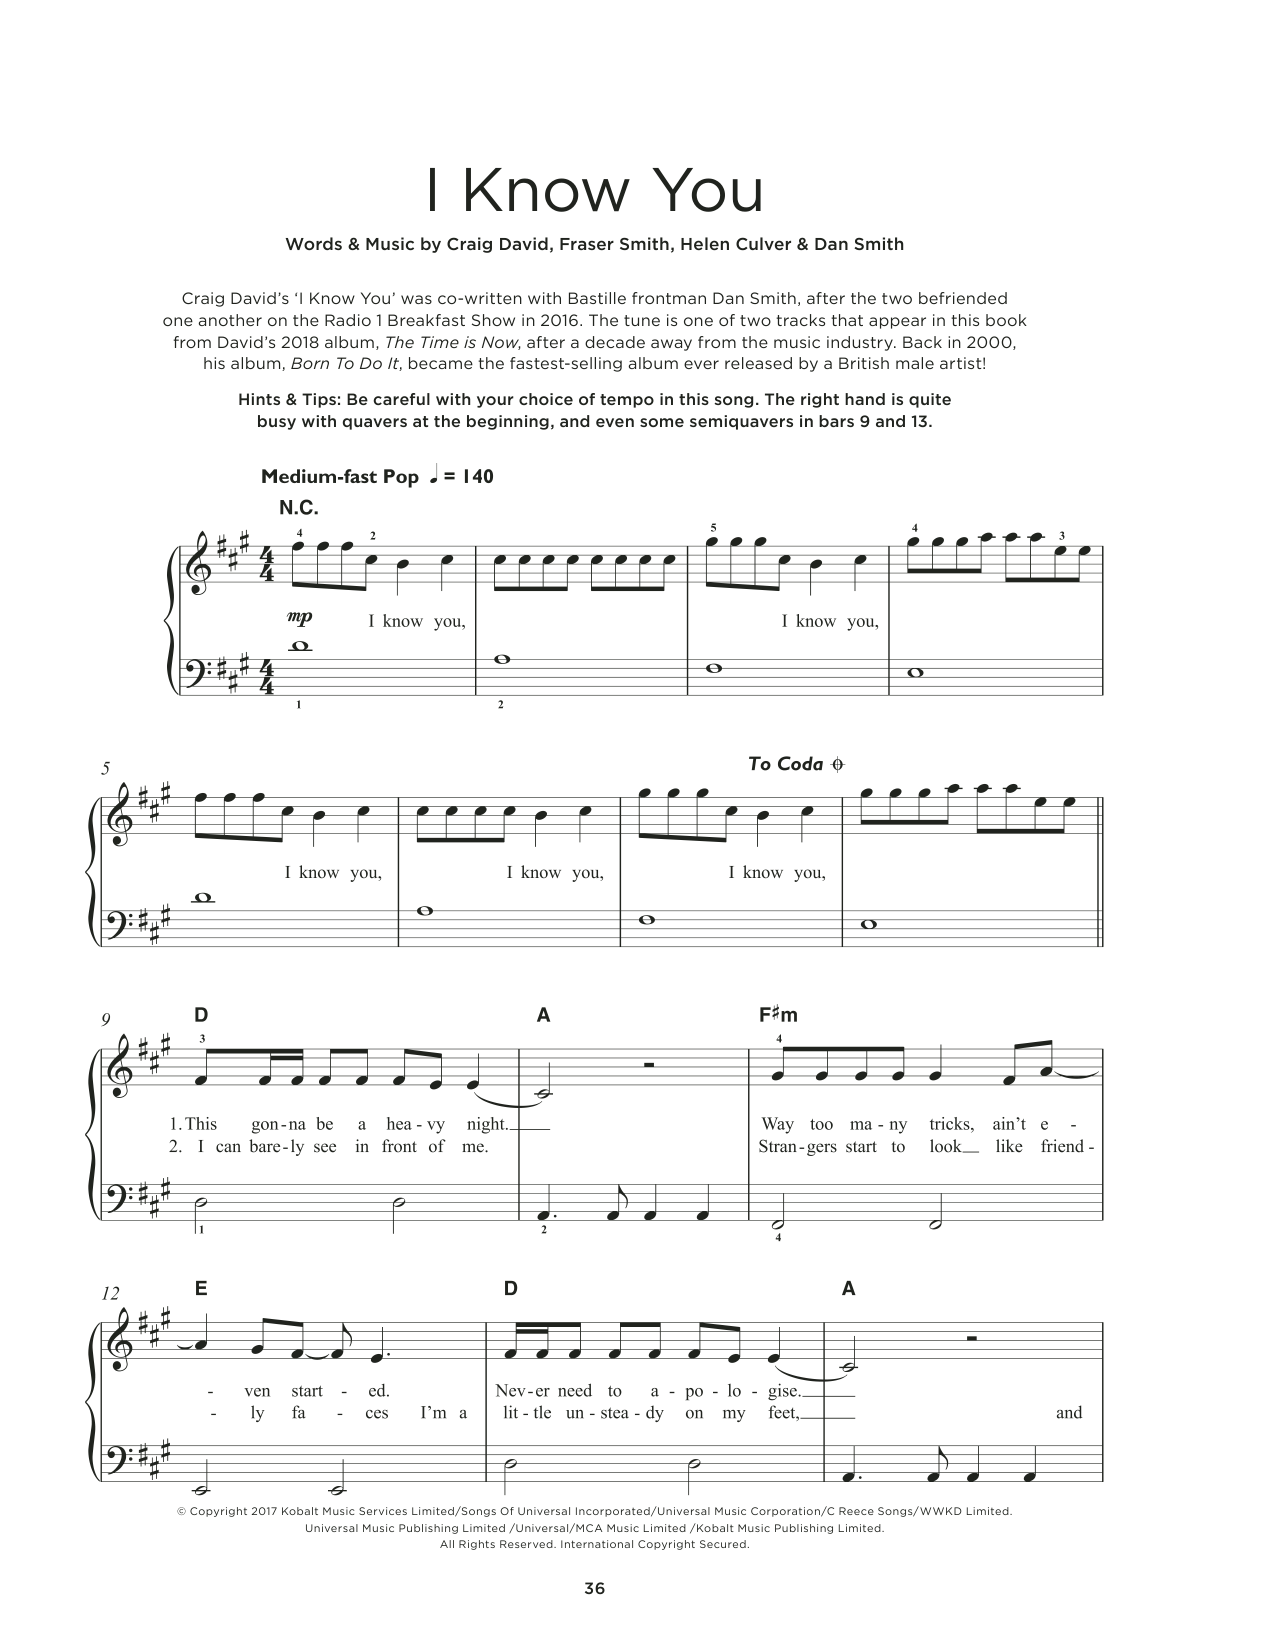 Craig David I Know You (feat. Bastille) Sheet Music Notes & Chords for Ukulele - Download or Print PDF